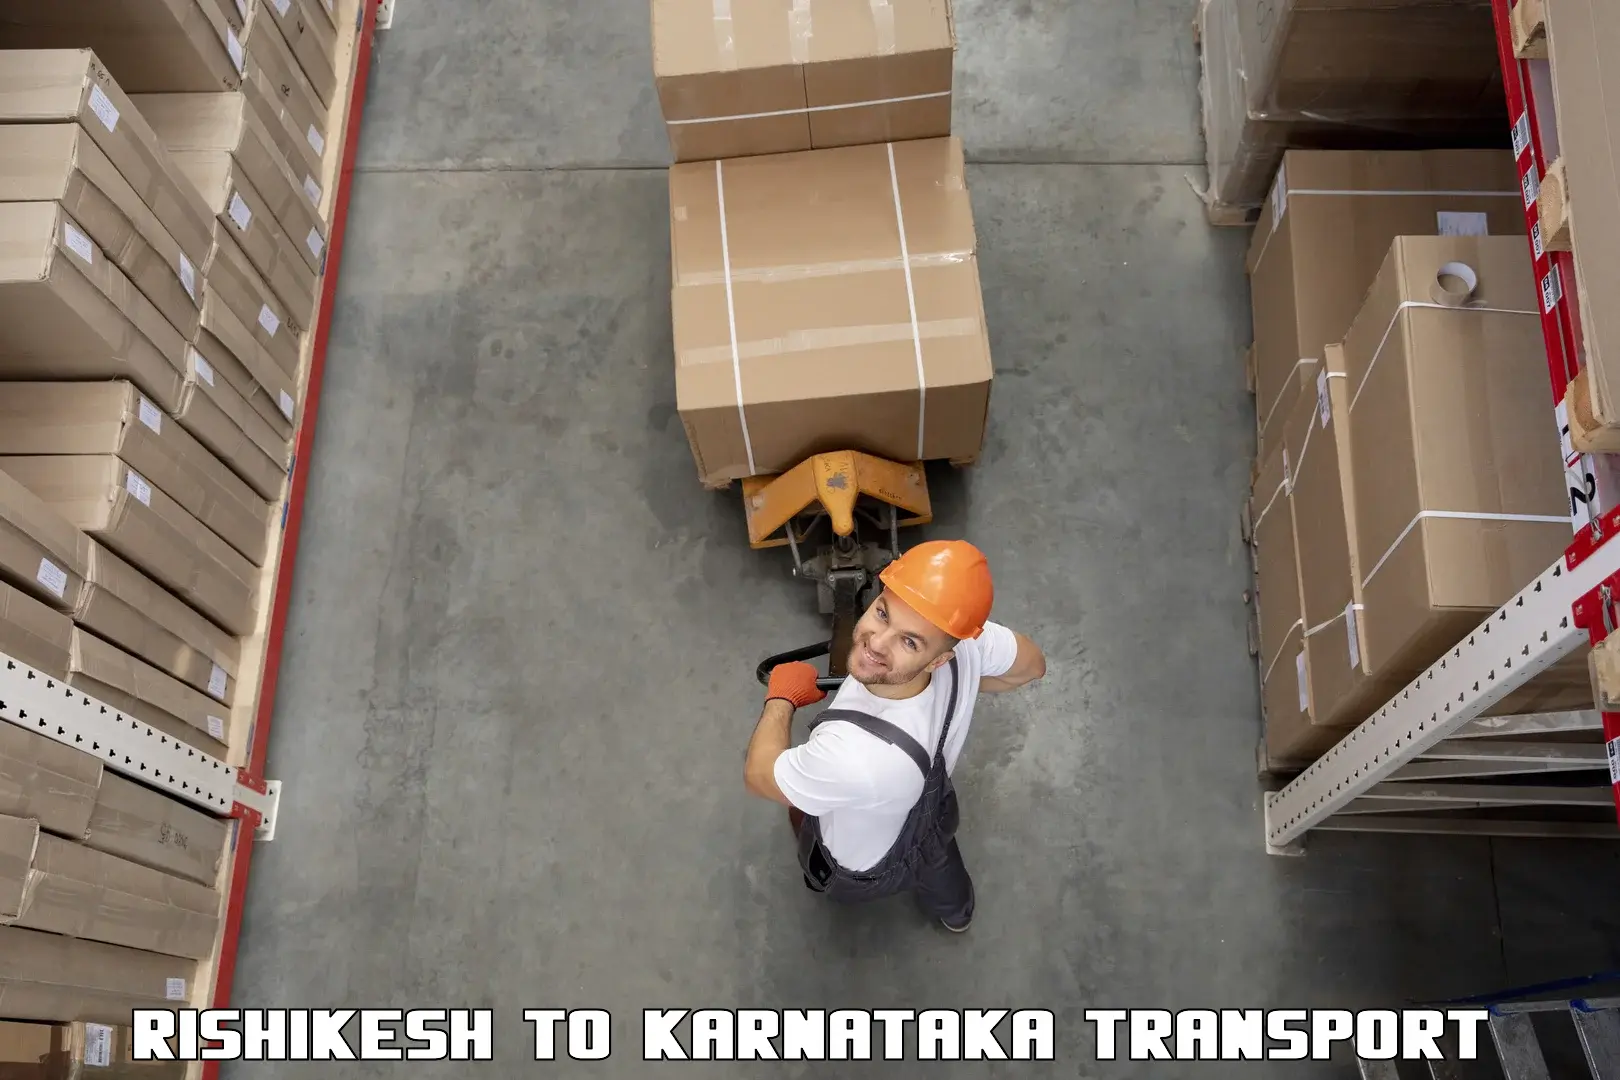 Furniture transport service Rishikesh to Bangalore